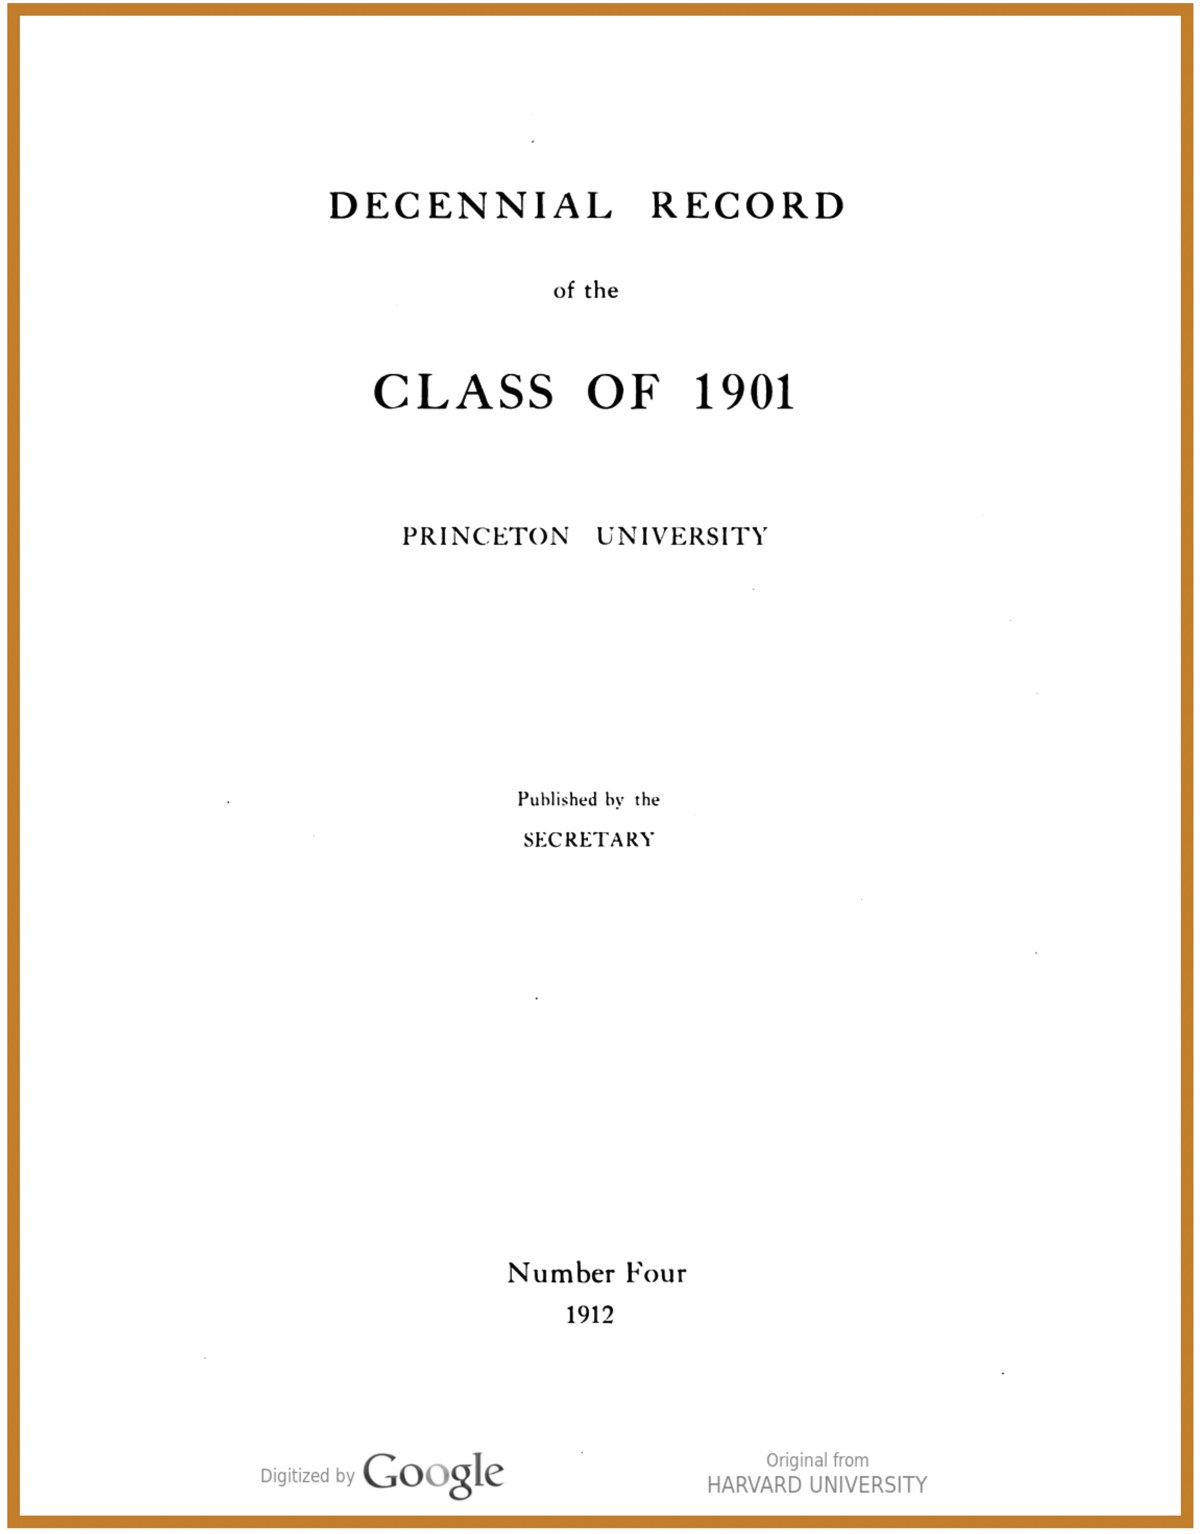 1901's Decennial Reunion Book, in 1912